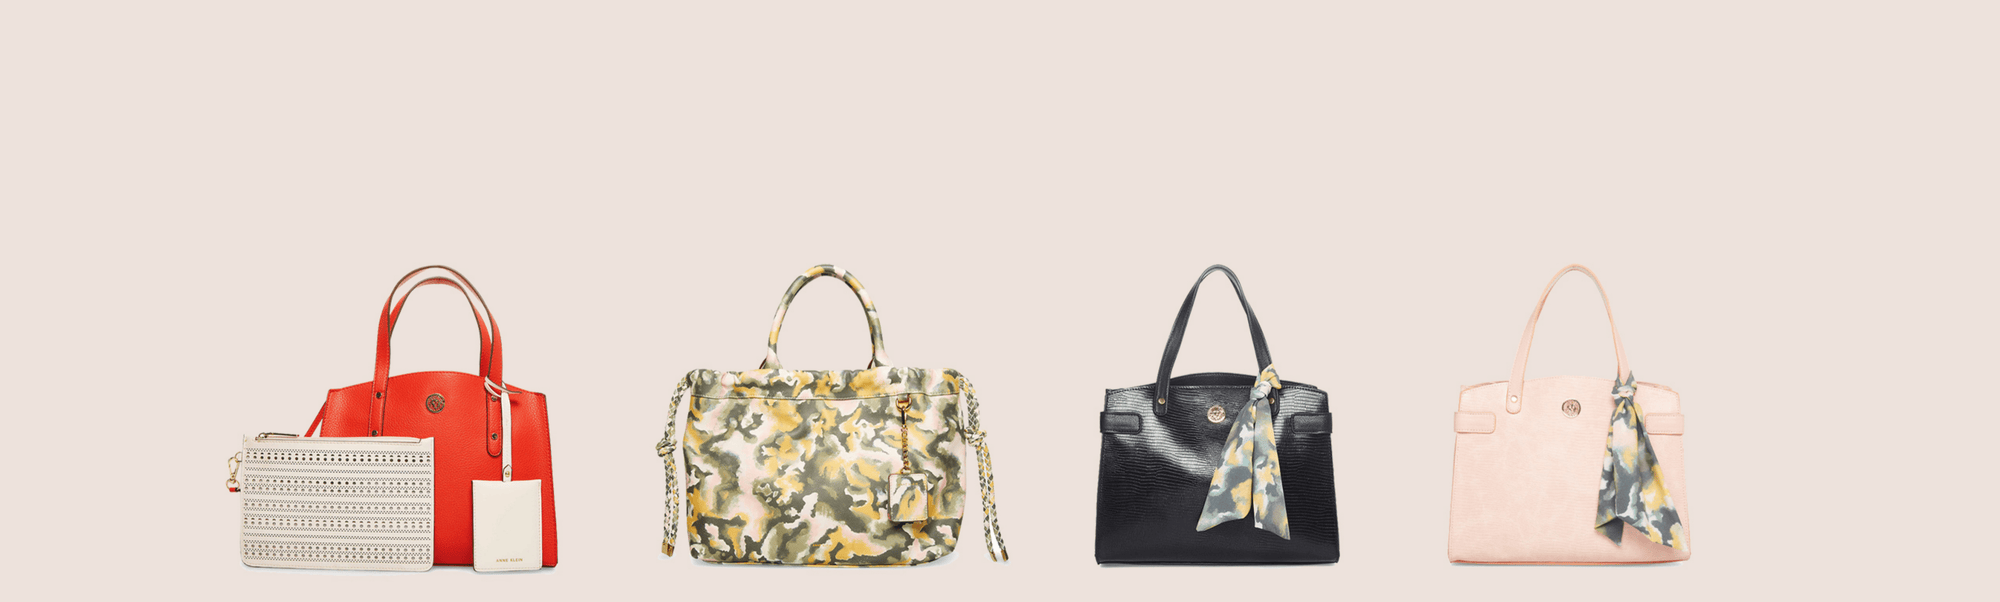 Stylish Satchel Bags for Autumn 2021